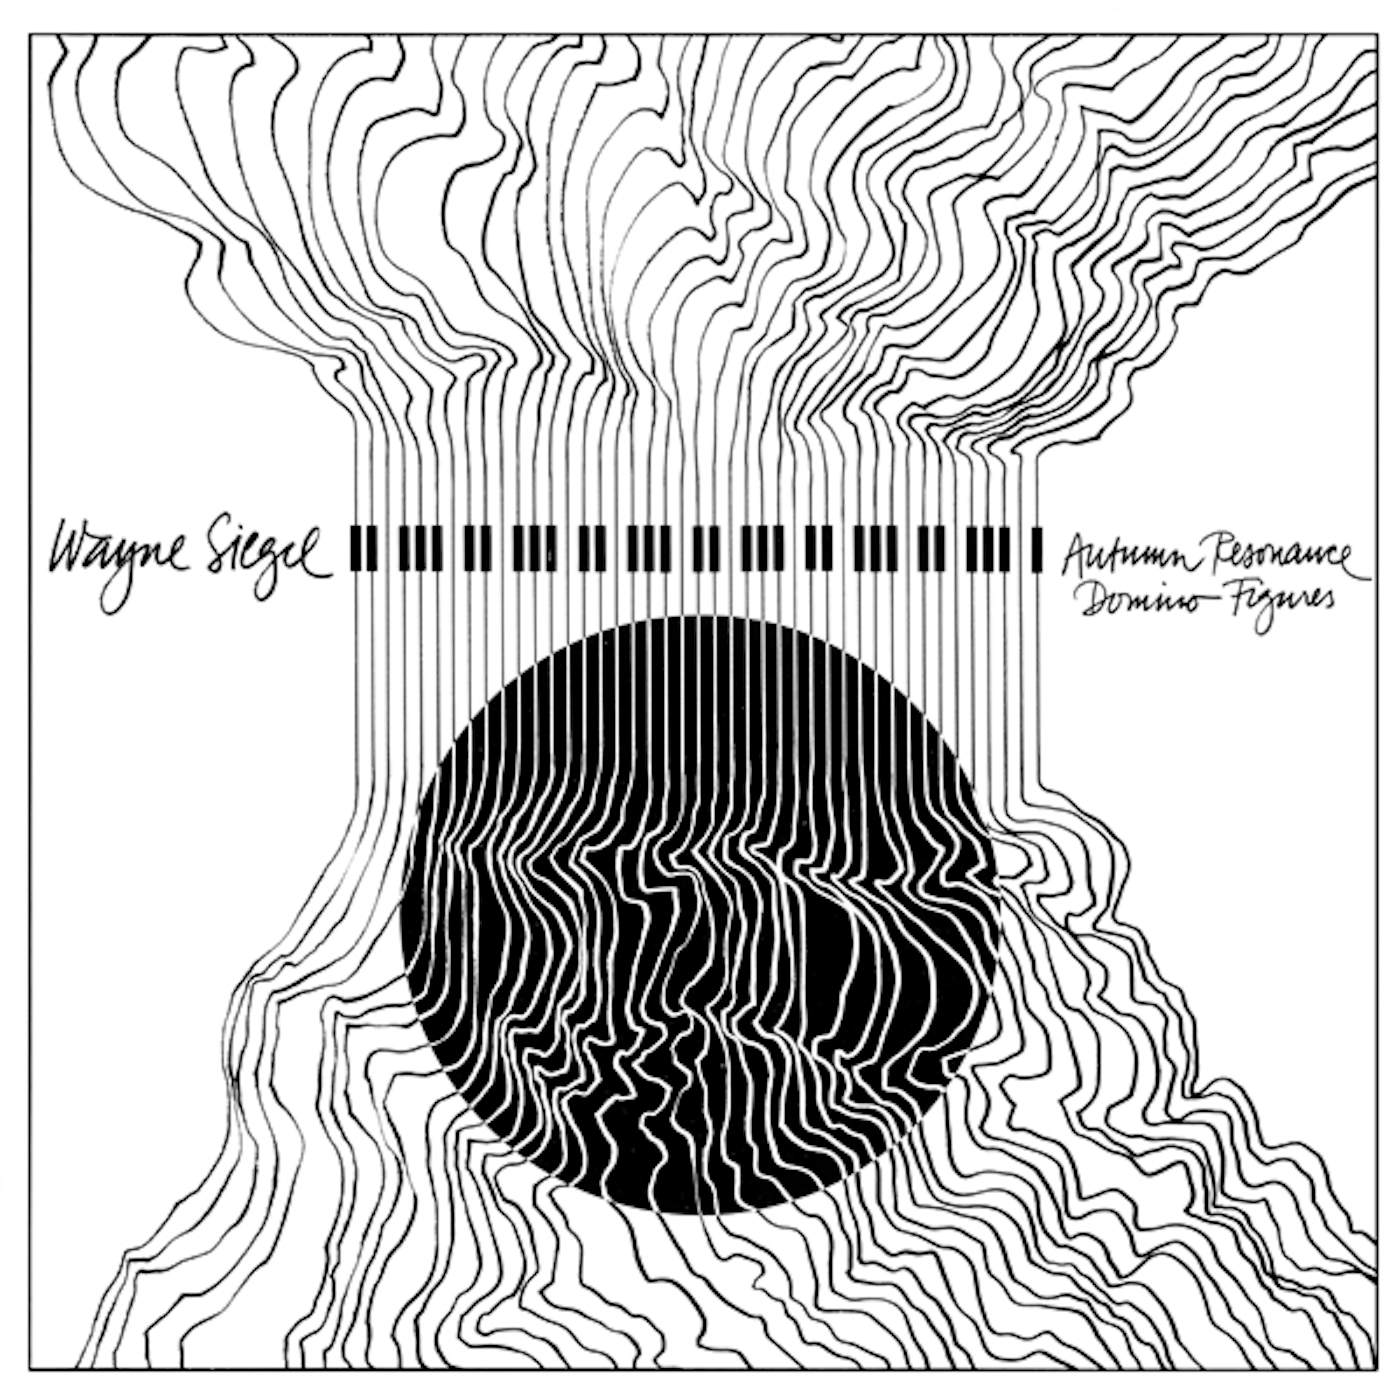 Wayne Siegel AUTUMN RESONANCE / DOMINO FIGURES Vinyl Record